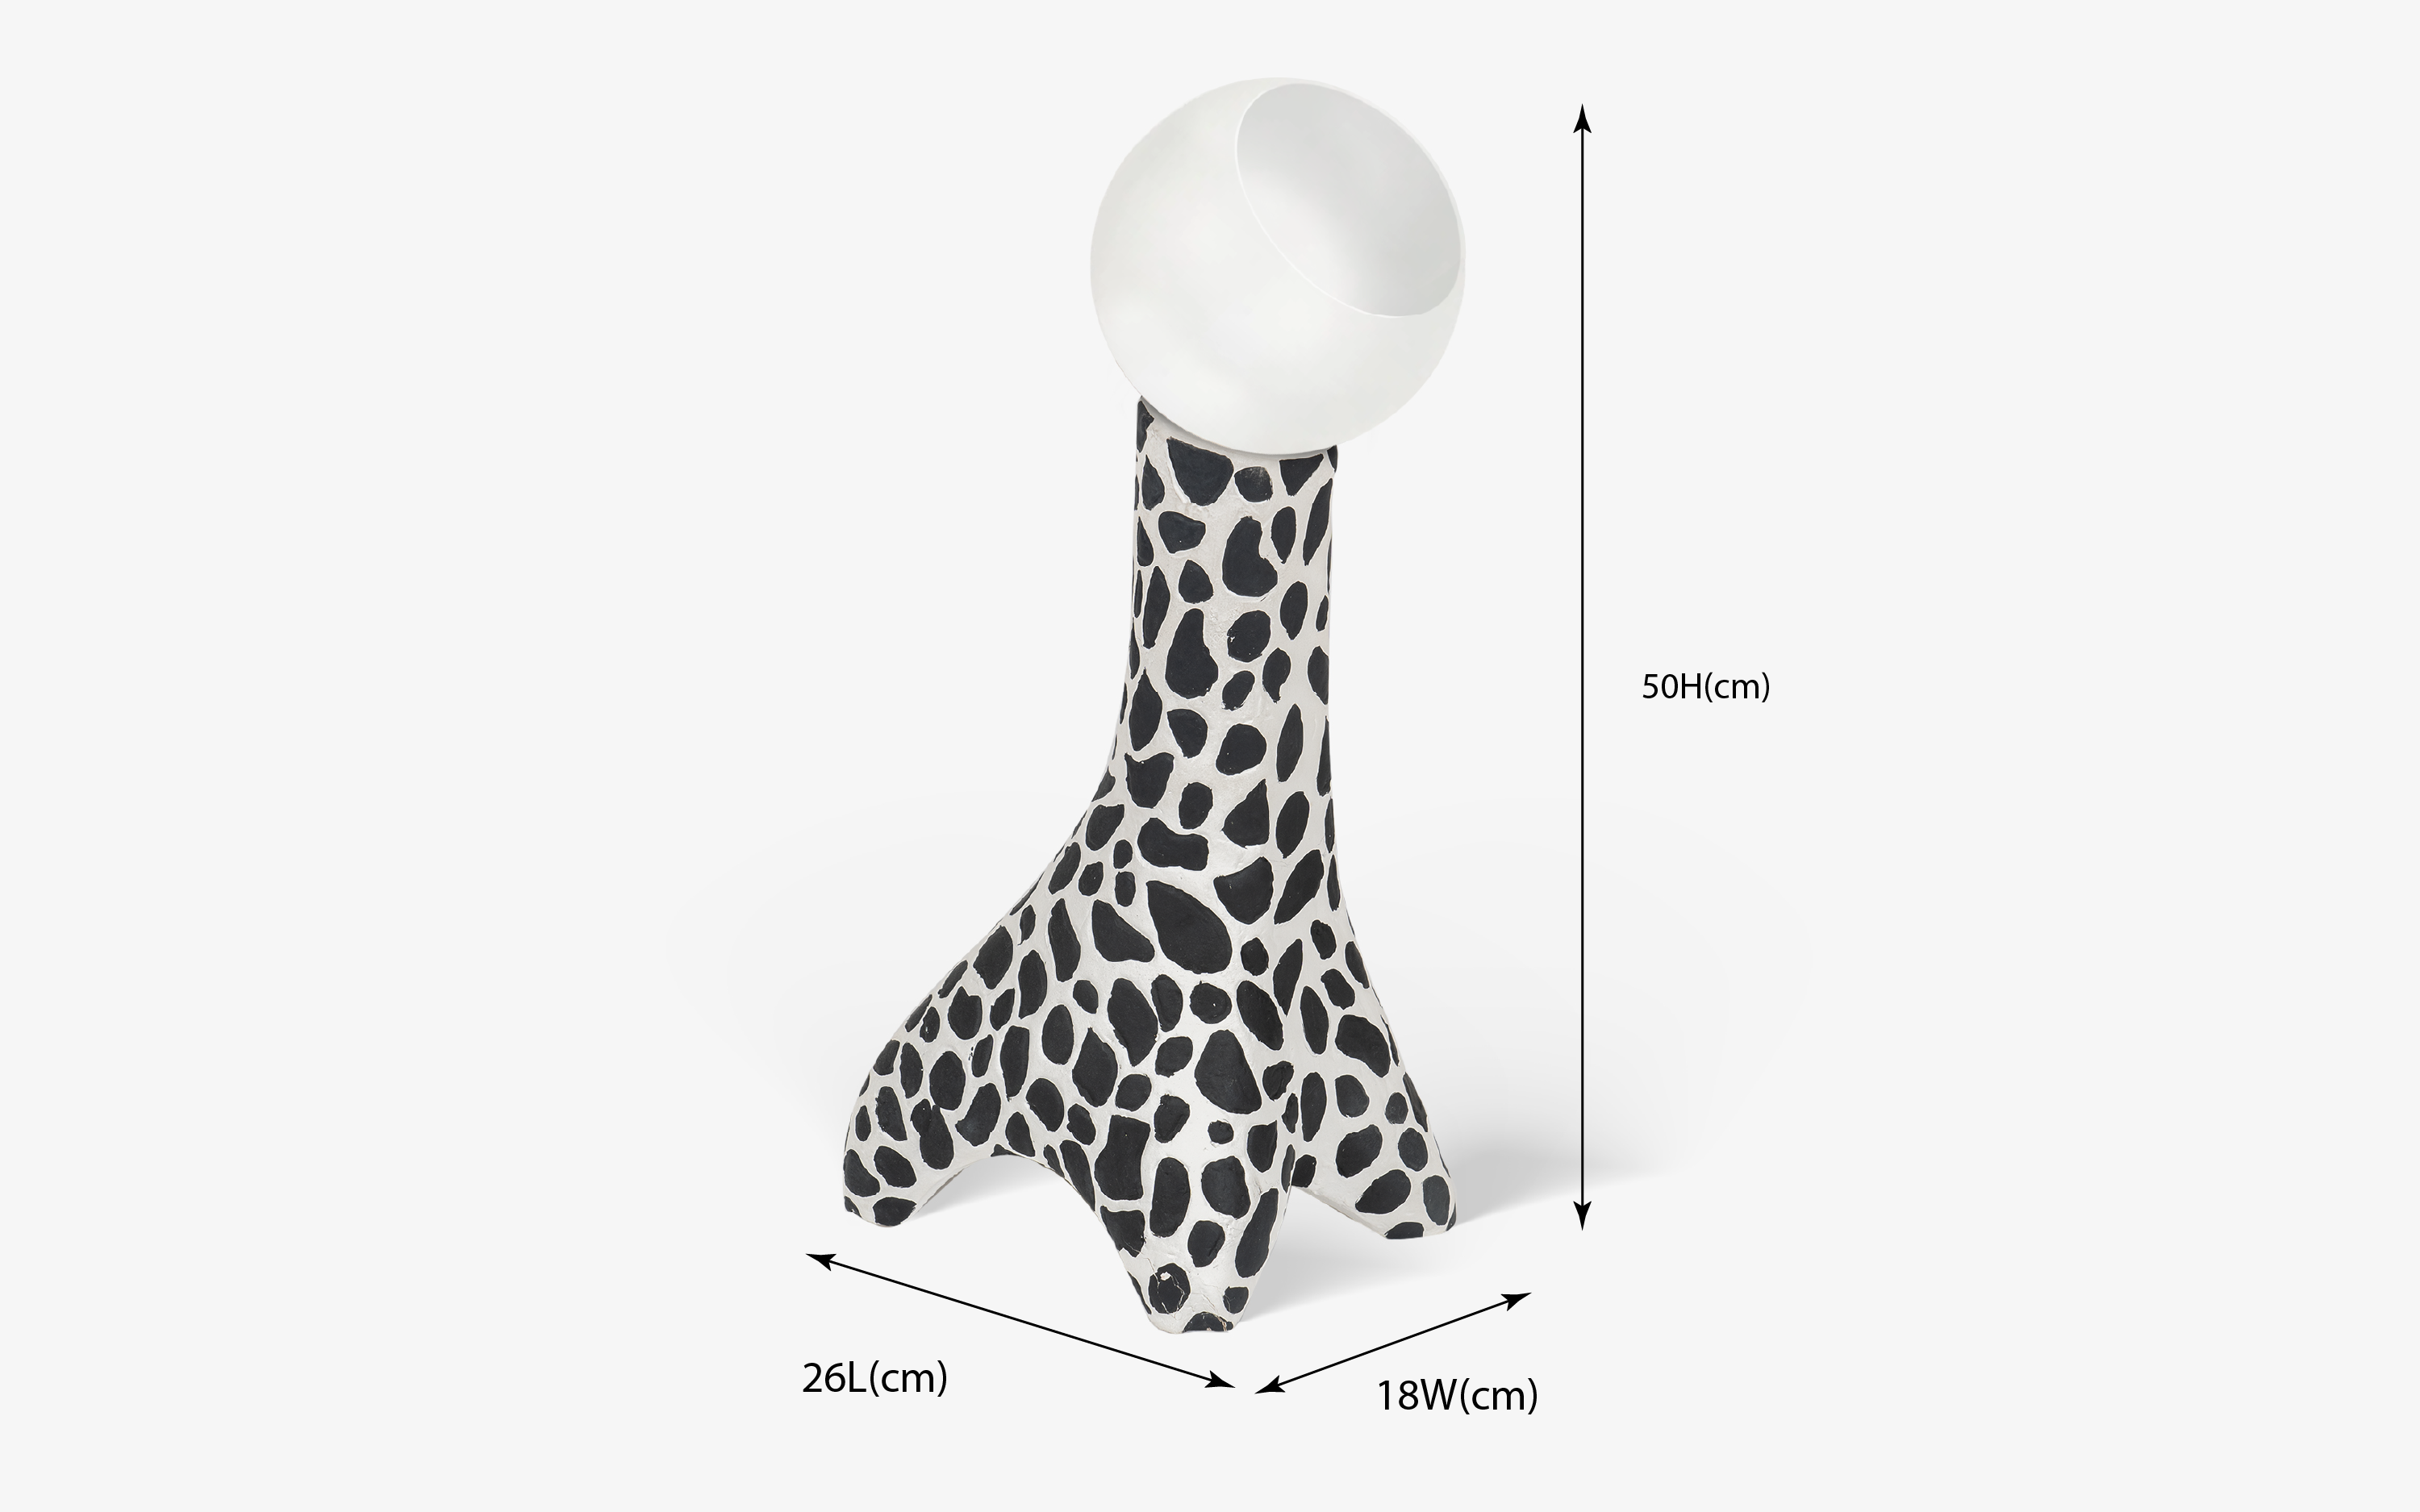 Giraffe table lamps for living room dimensions 